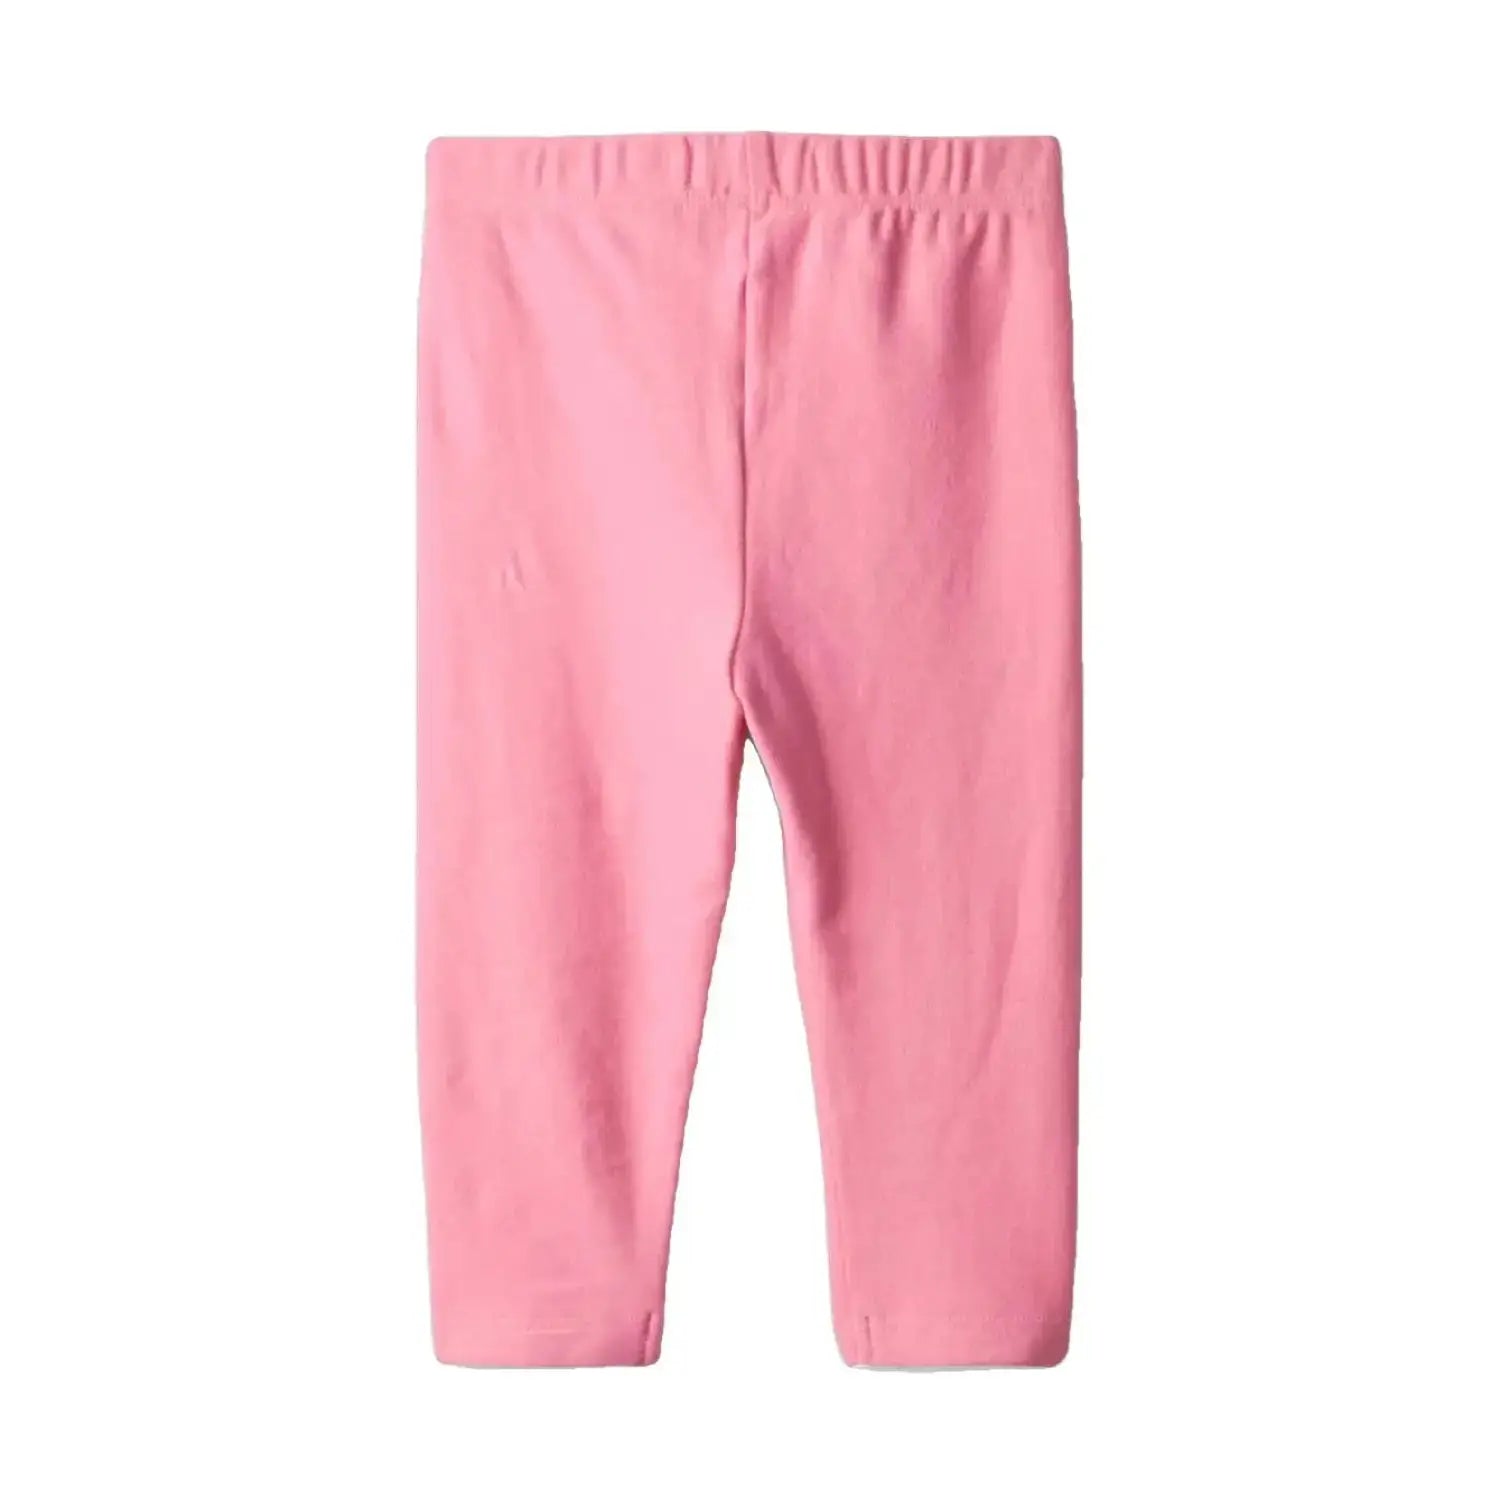 Hatley Baby Pink Cozy Leggings, Sachet Pink, back view 